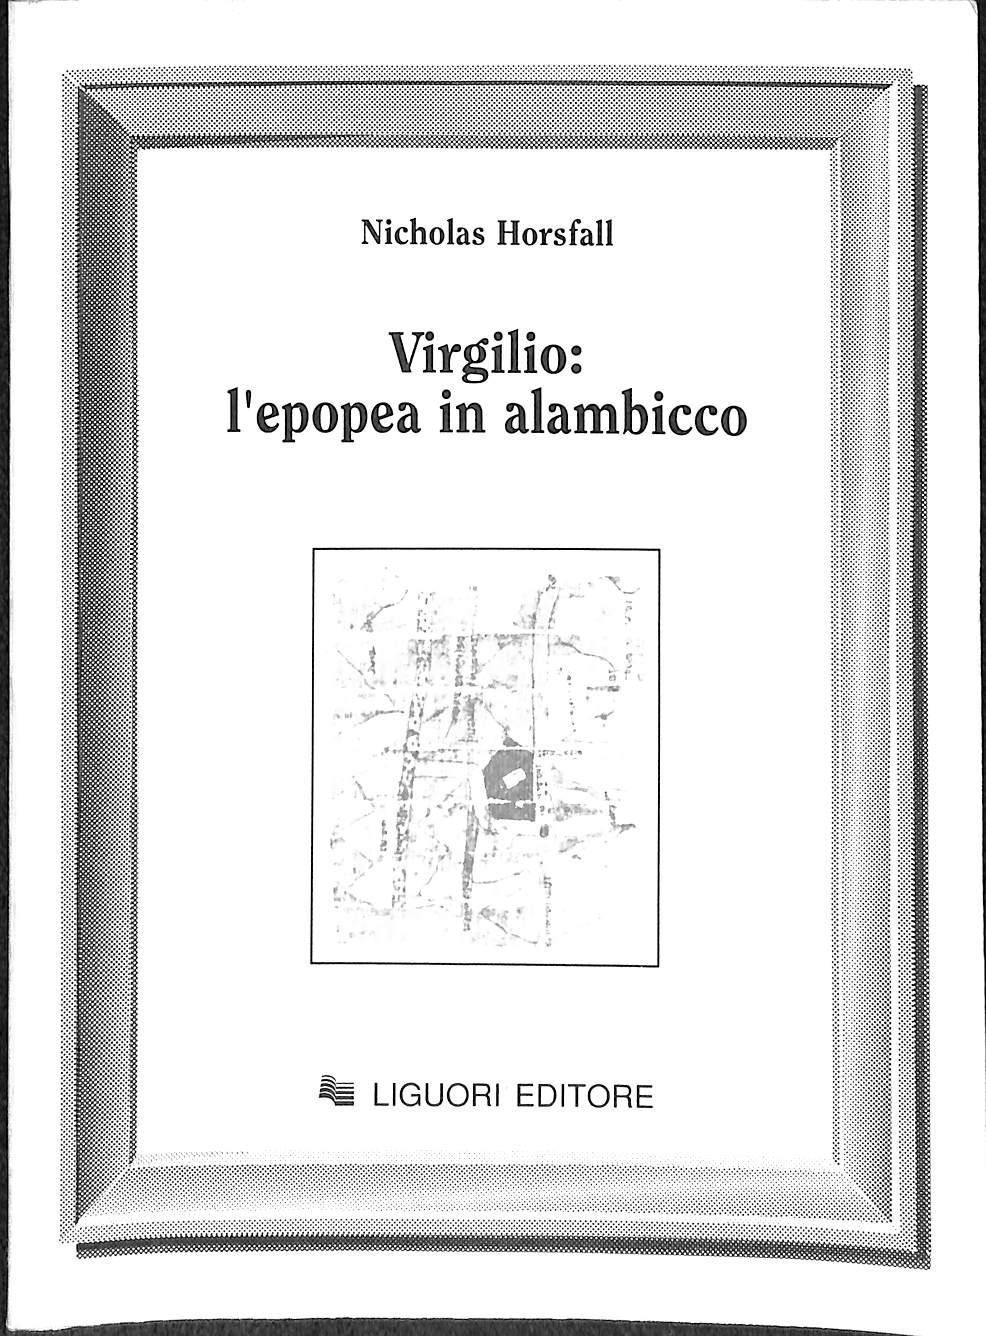 Virgilio: l'epopea in alambicco  / Nicholas Horsfall